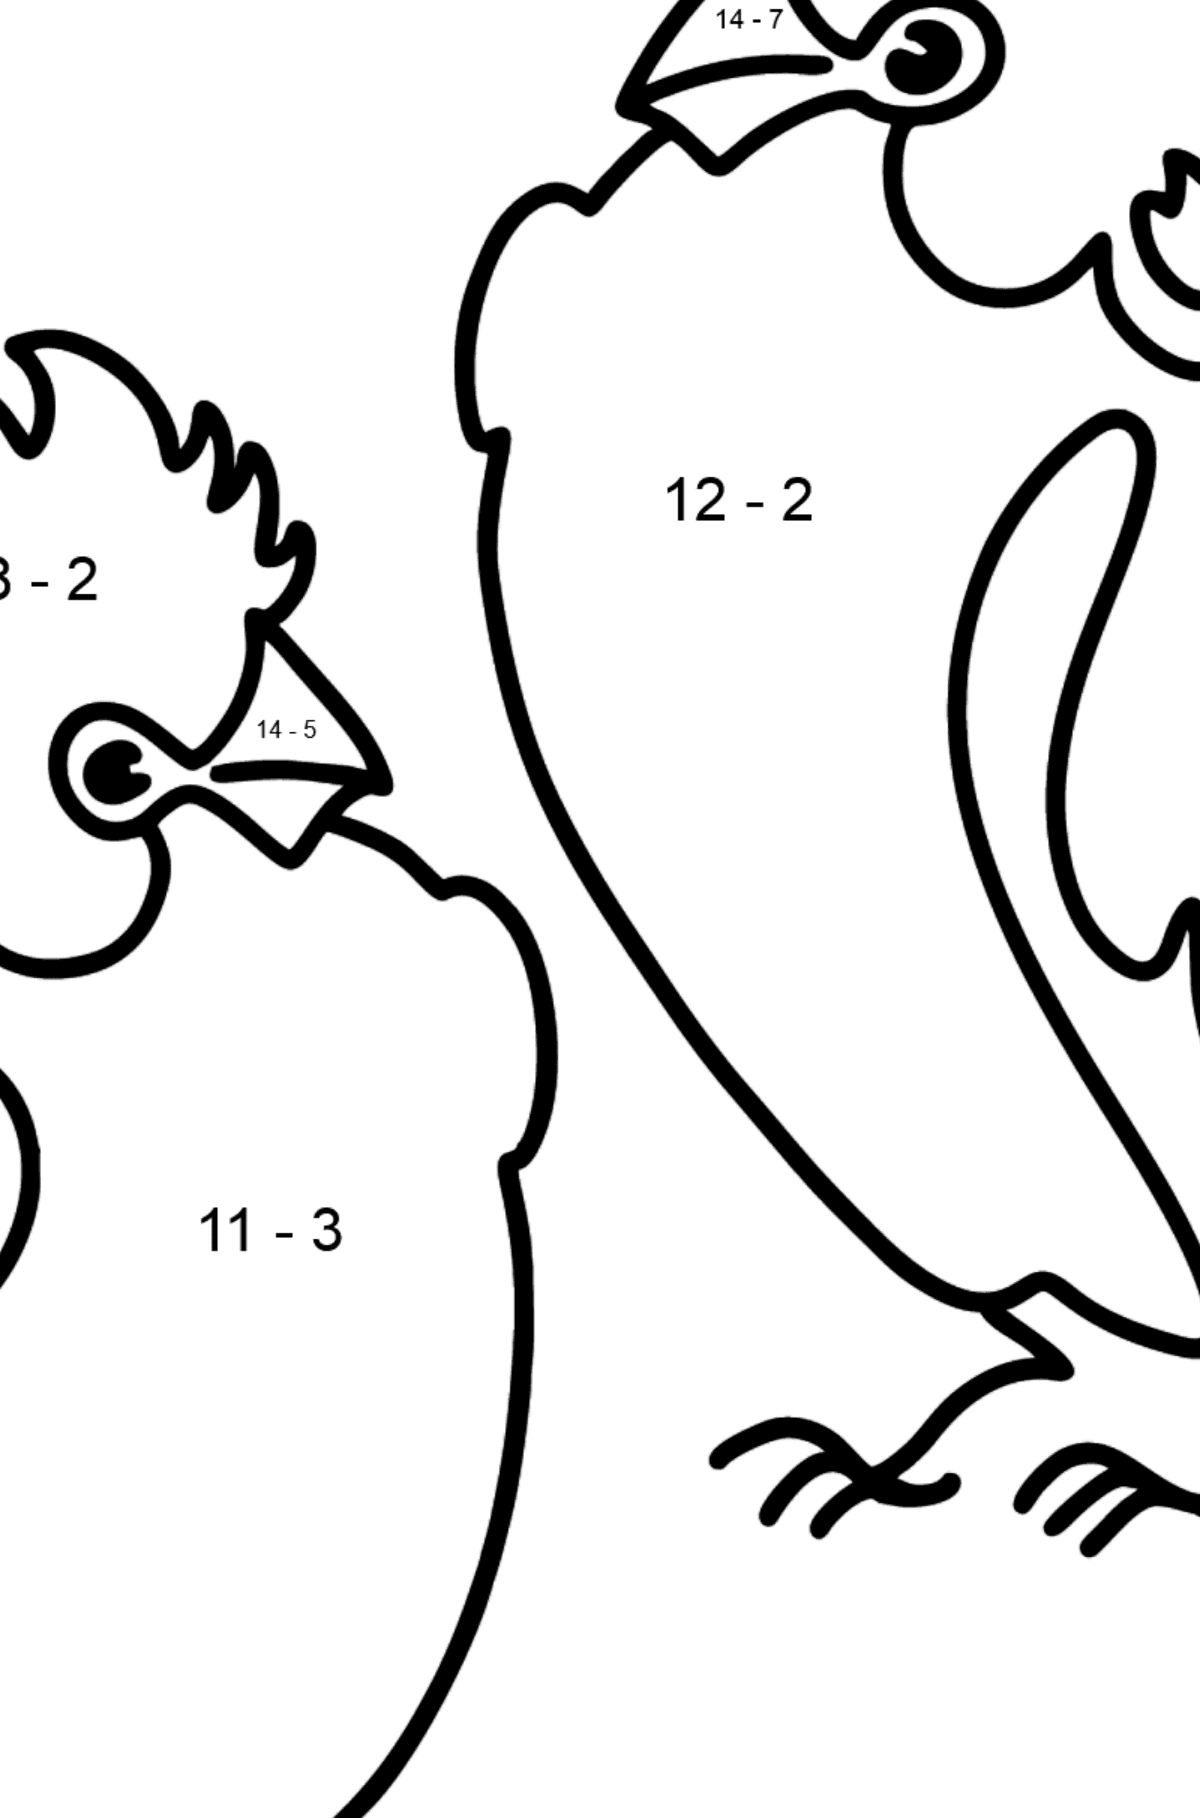 2 Parrots coloring page - Math Coloring - Subtraction for Kids